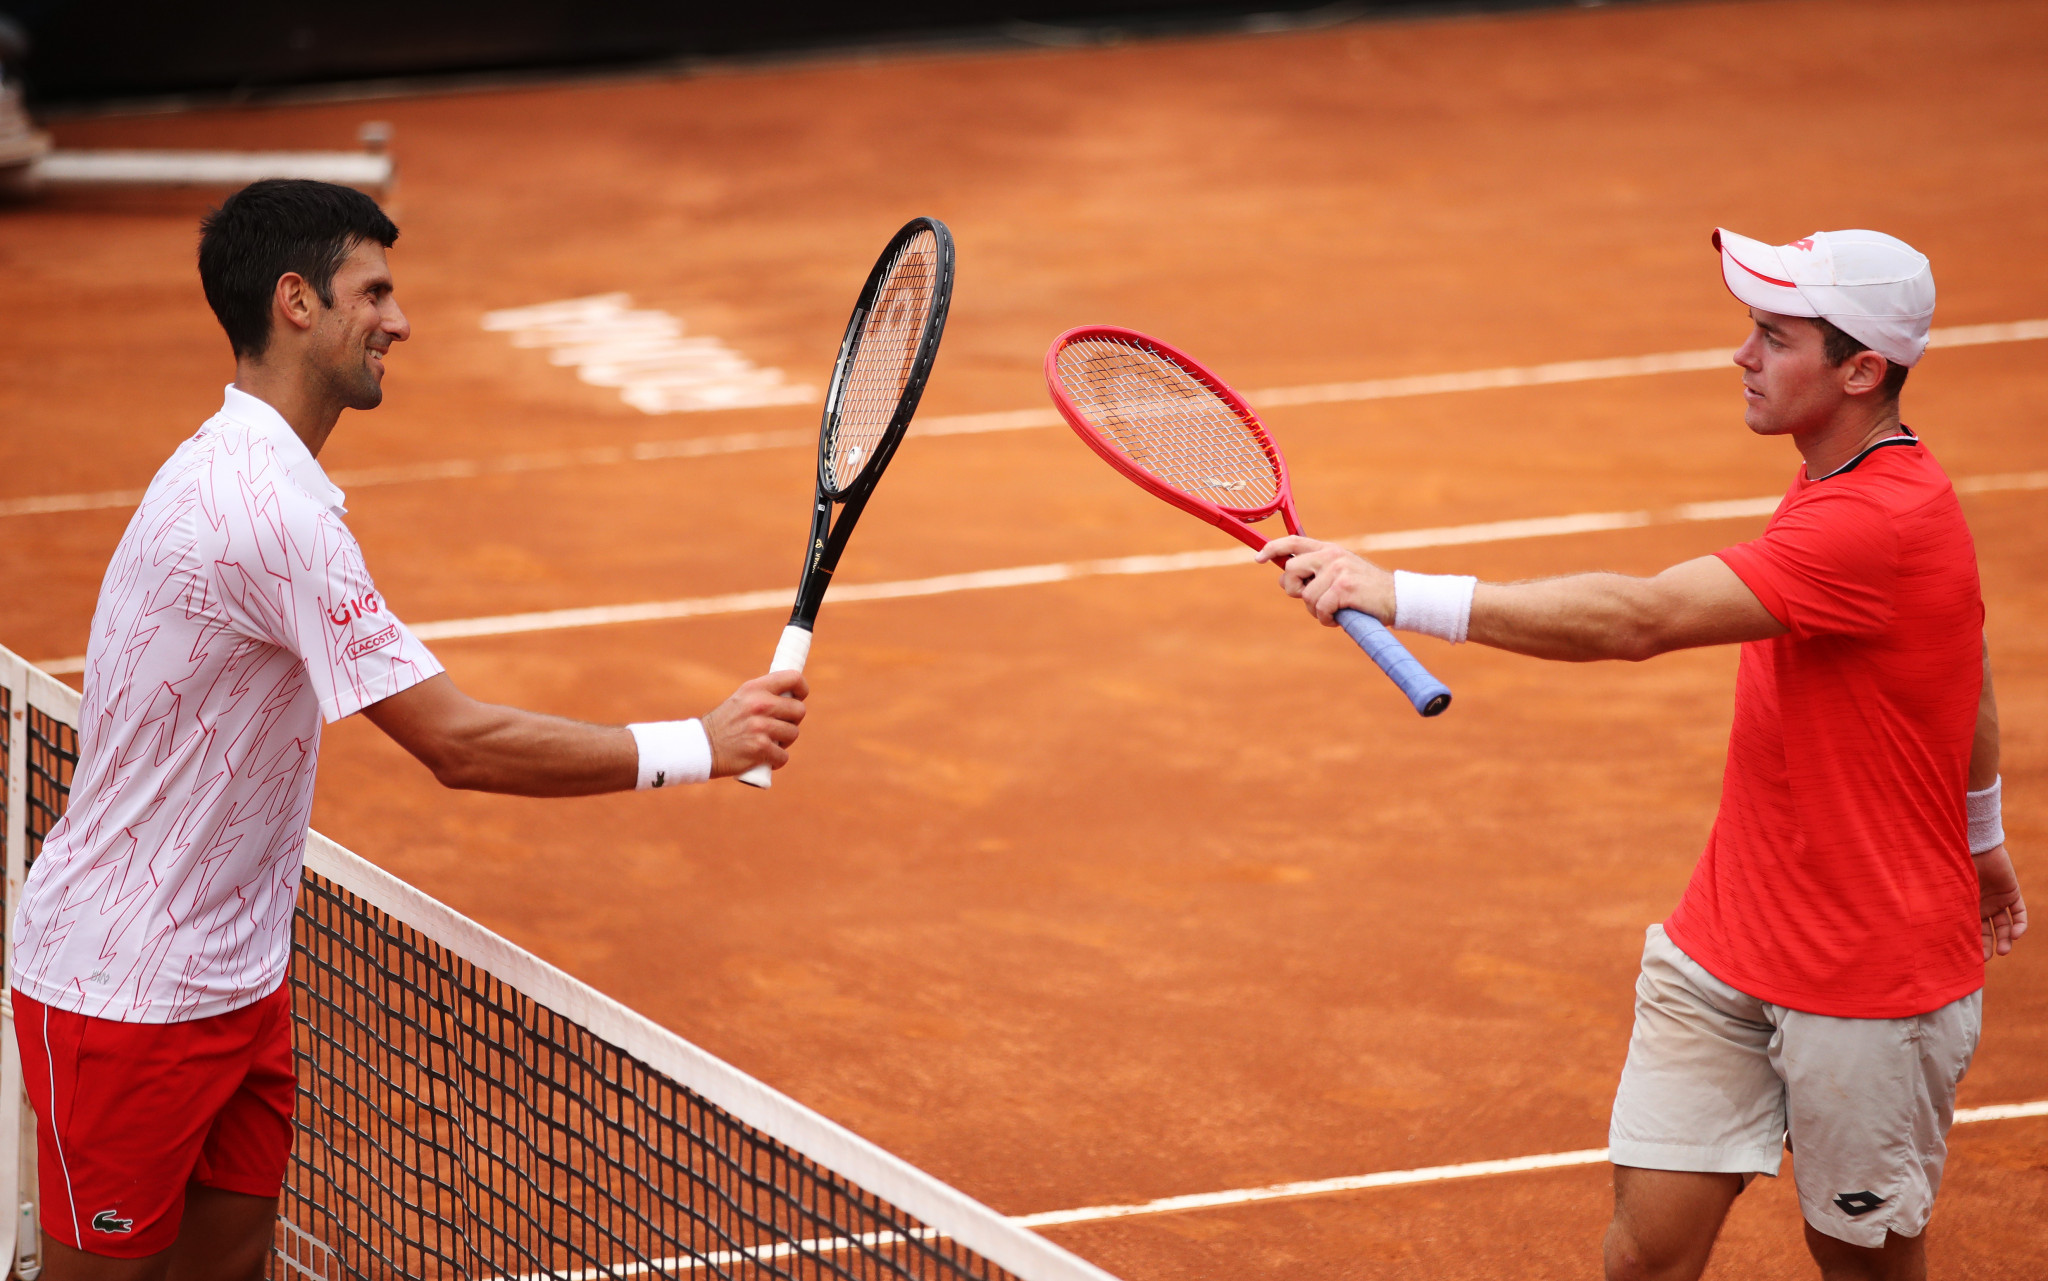 Men's top seed Novak Djokovic beat German qualifier Dominik Koepfer in three sets to reach the last four in Rome ©Getty Images